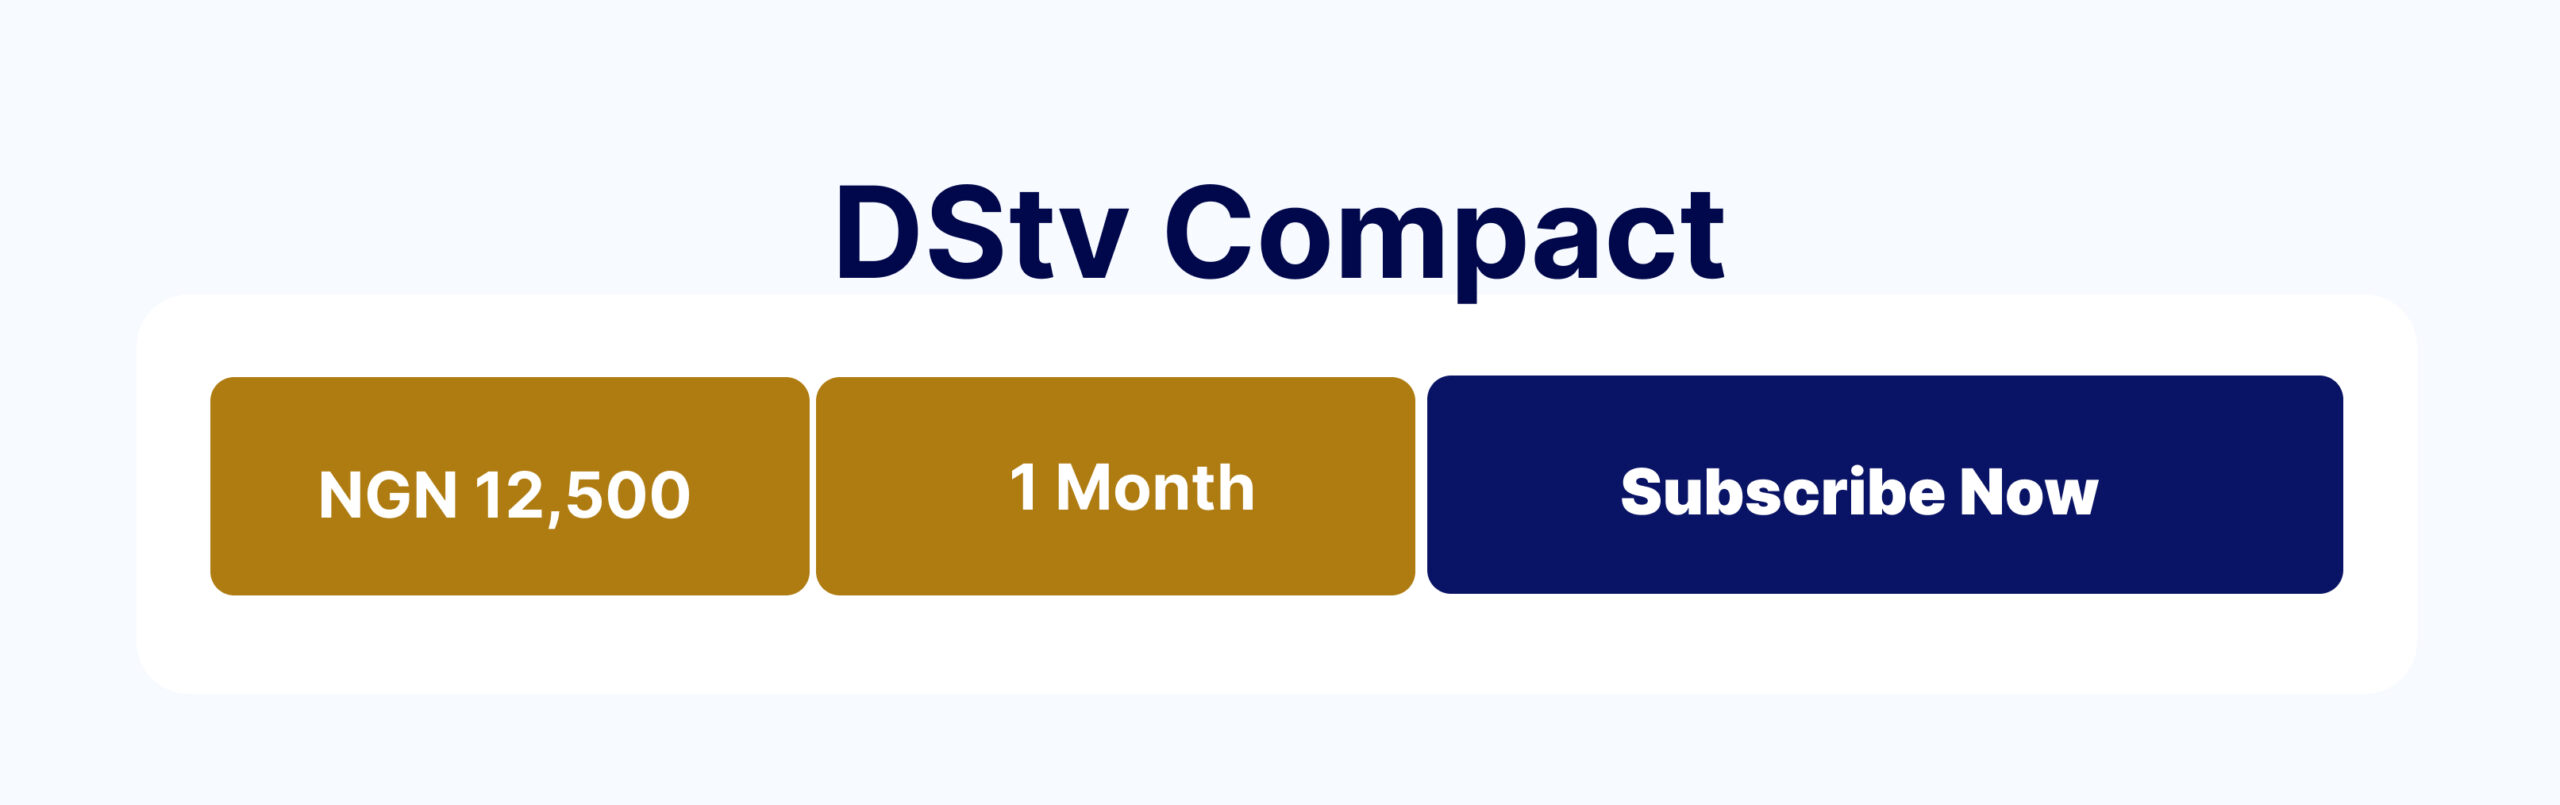 DStv Compact